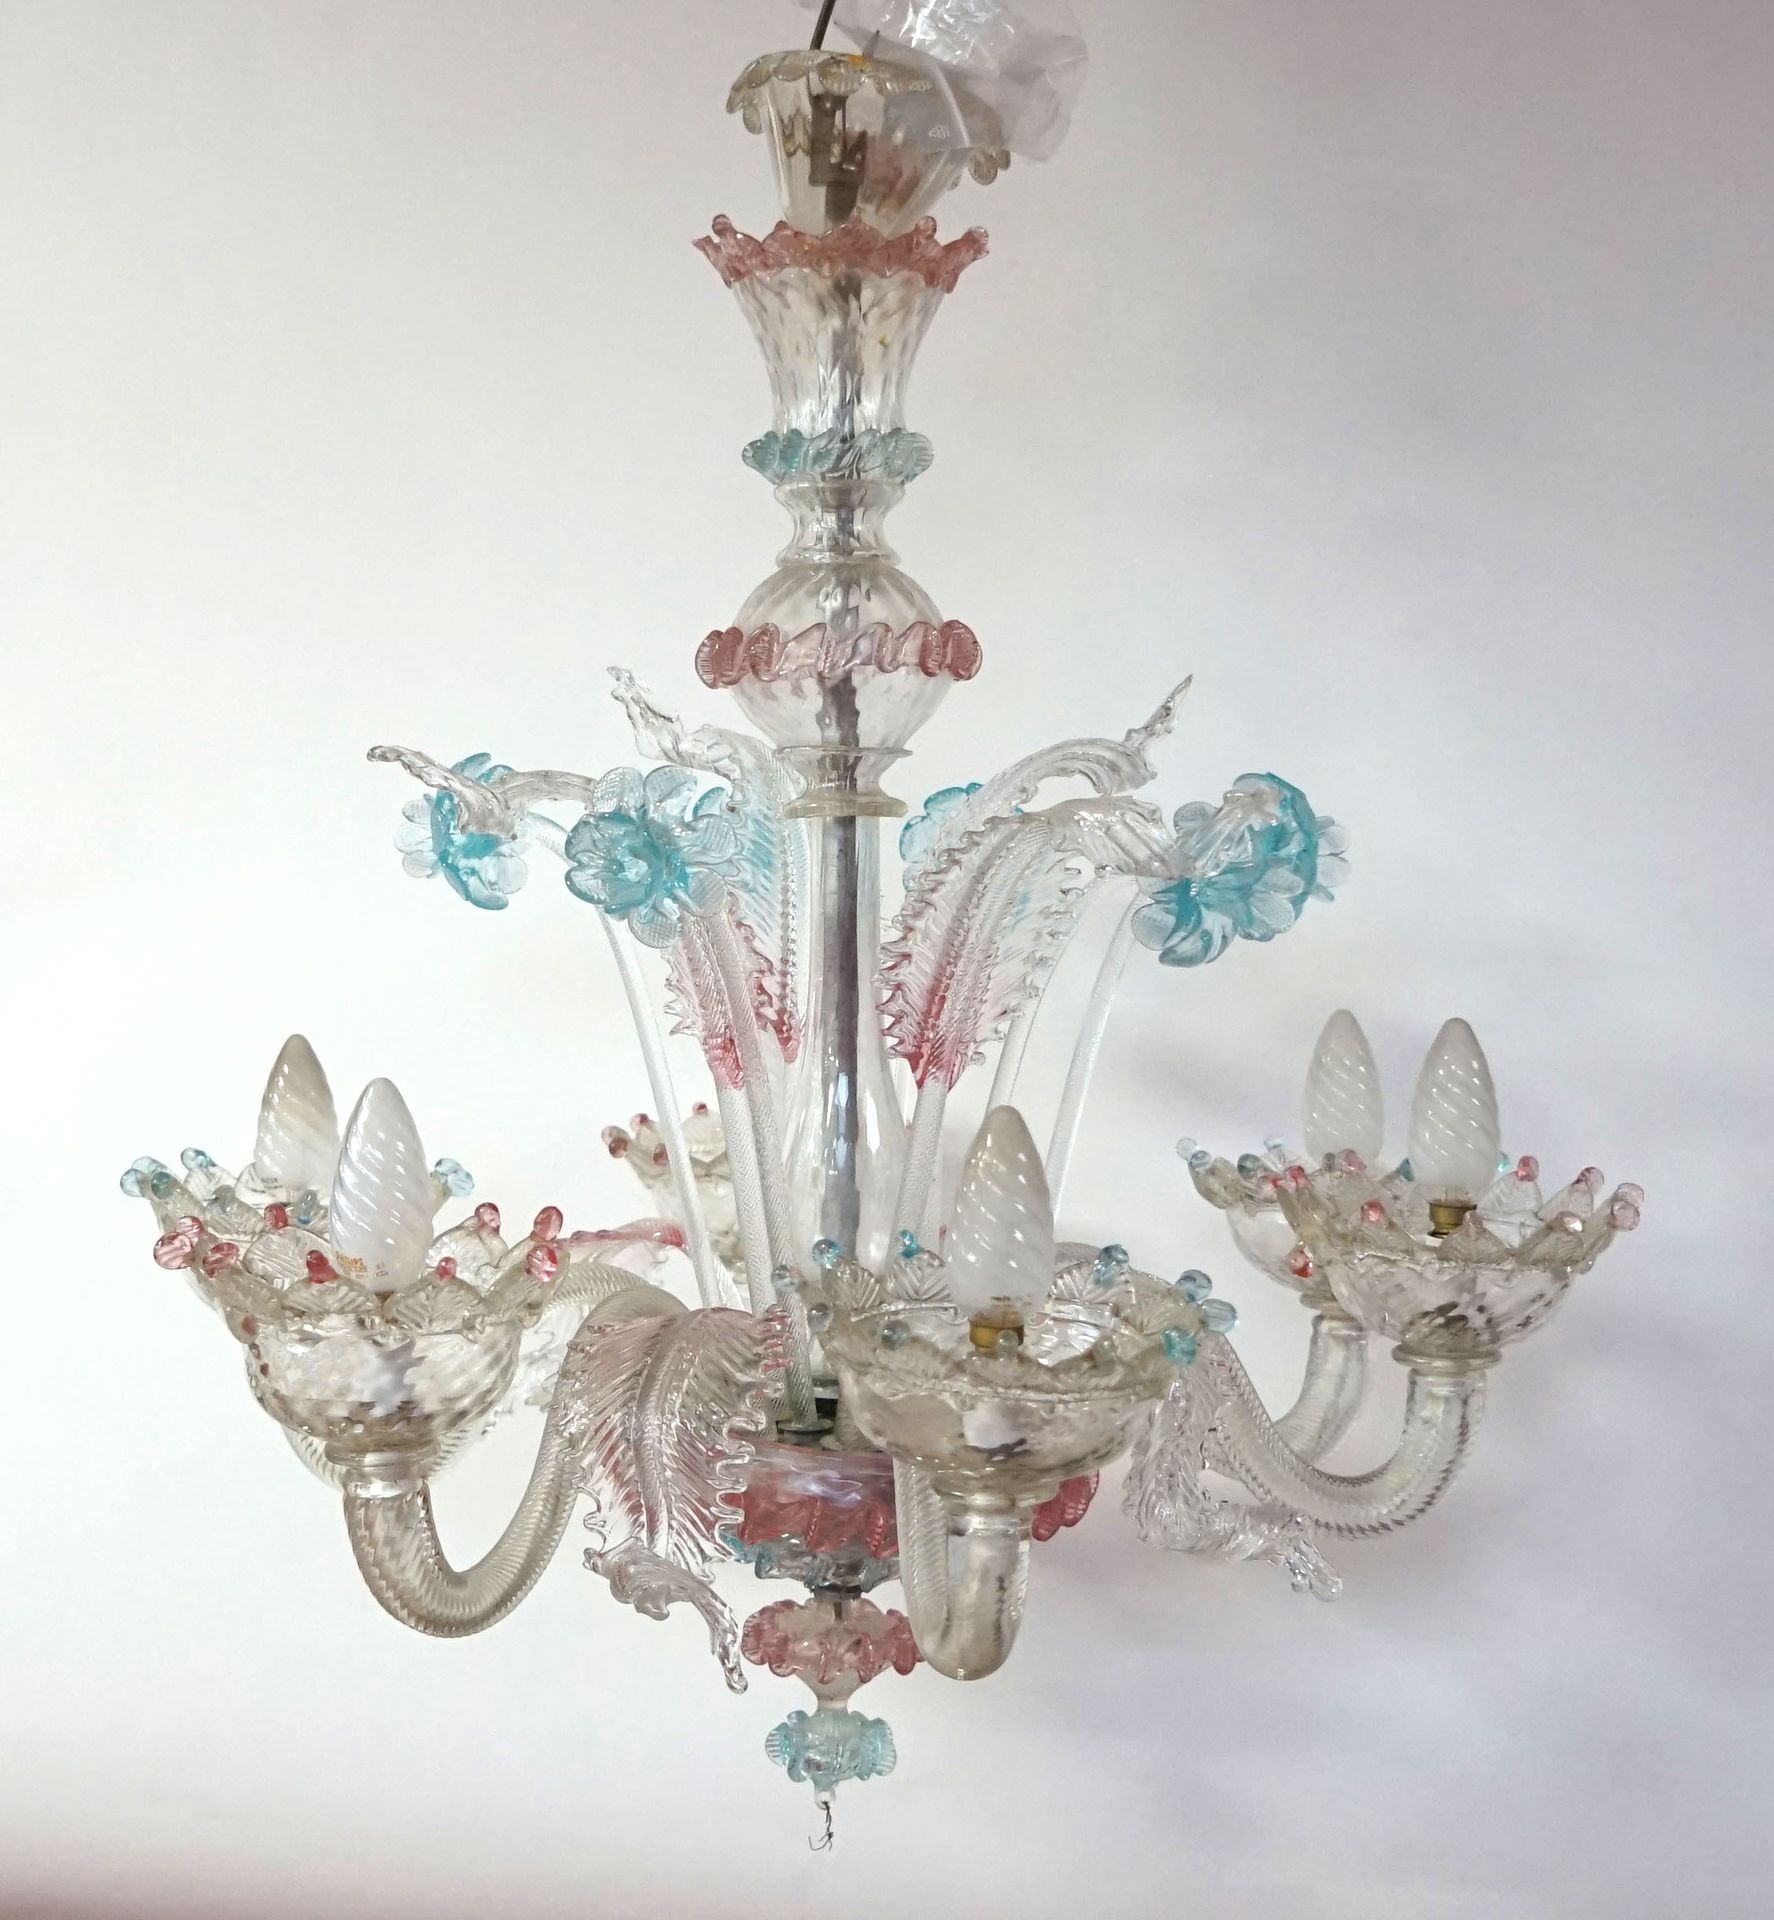 Null 透明和彩色的威尼斯玻璃LUSTRE，有六个灯。高度65厘米